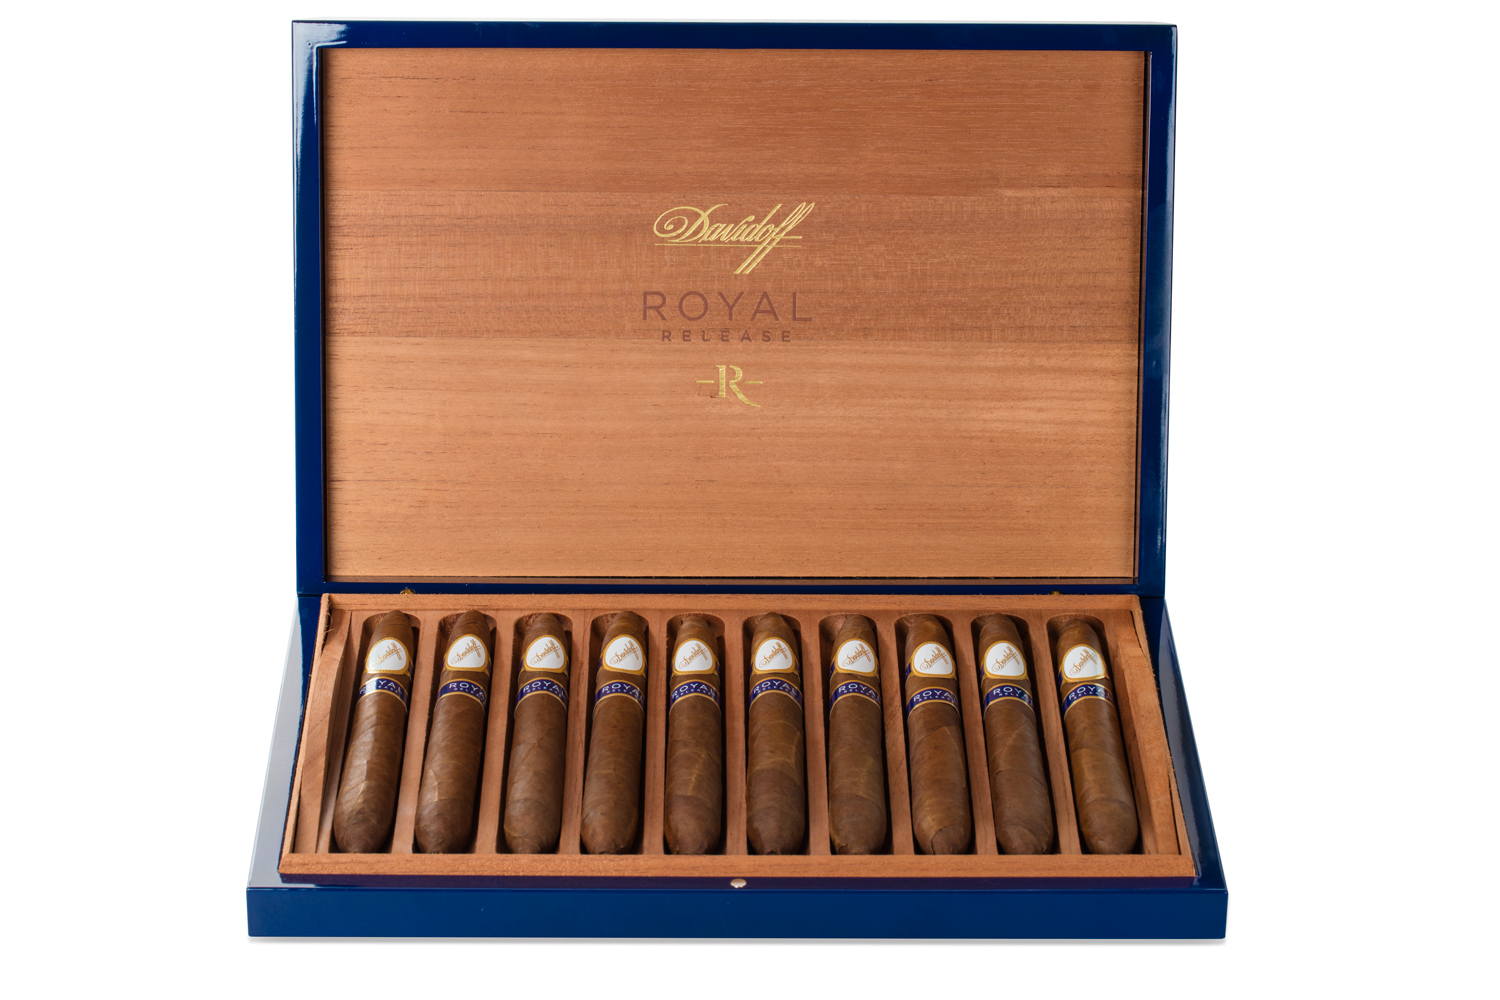 Davidoff Royal Release Salamone cigars